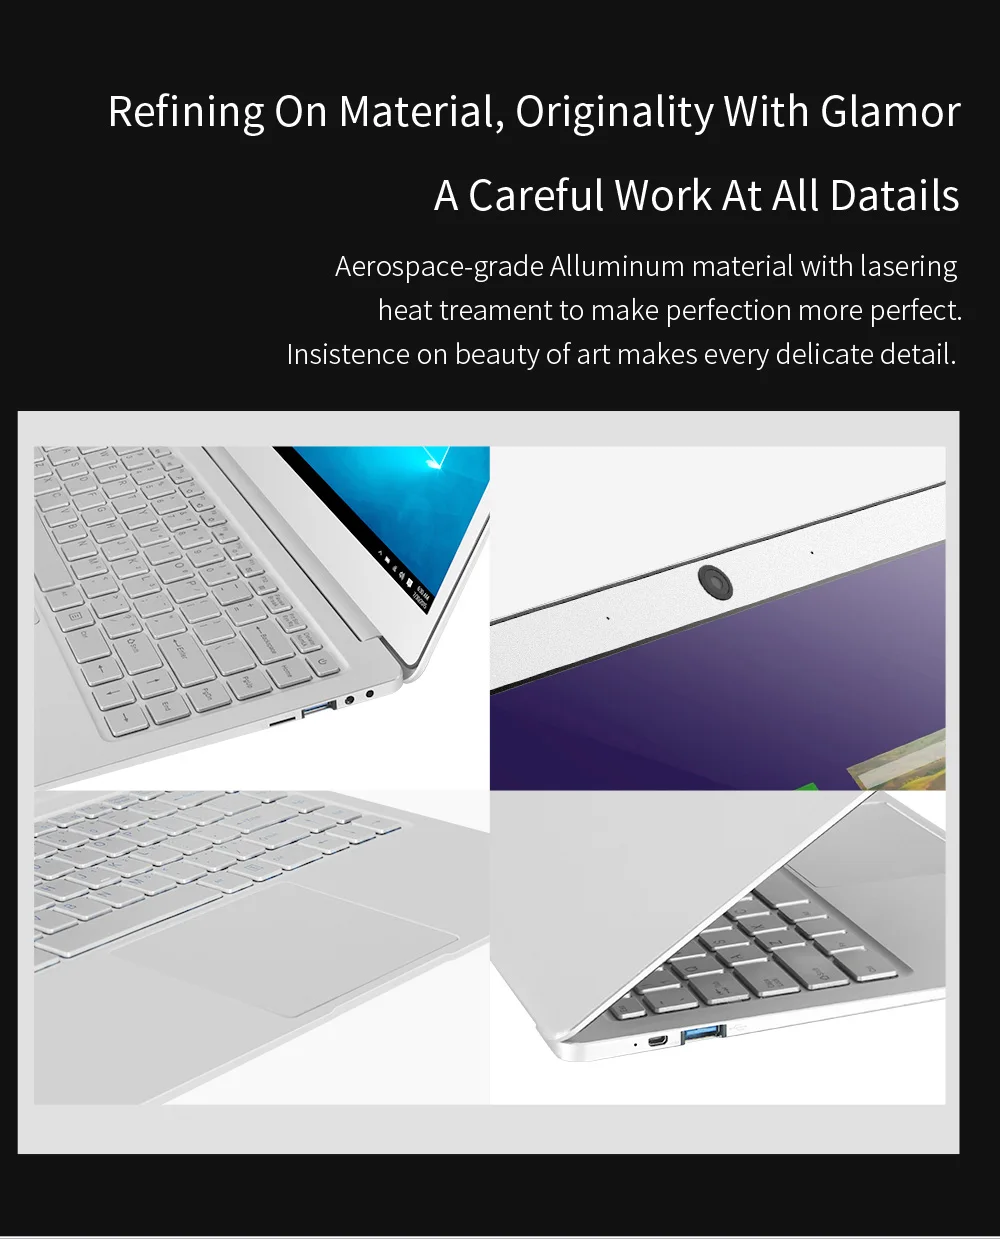 Jumper EZbook X4 ноутбук 14," FHD Windows 10 ноутбук клавиатура с подсветкой Intel Apollo Lake J3455 четырехъядерный процессор 6 ГБ+ 128 Гб SSD 2MP ПК